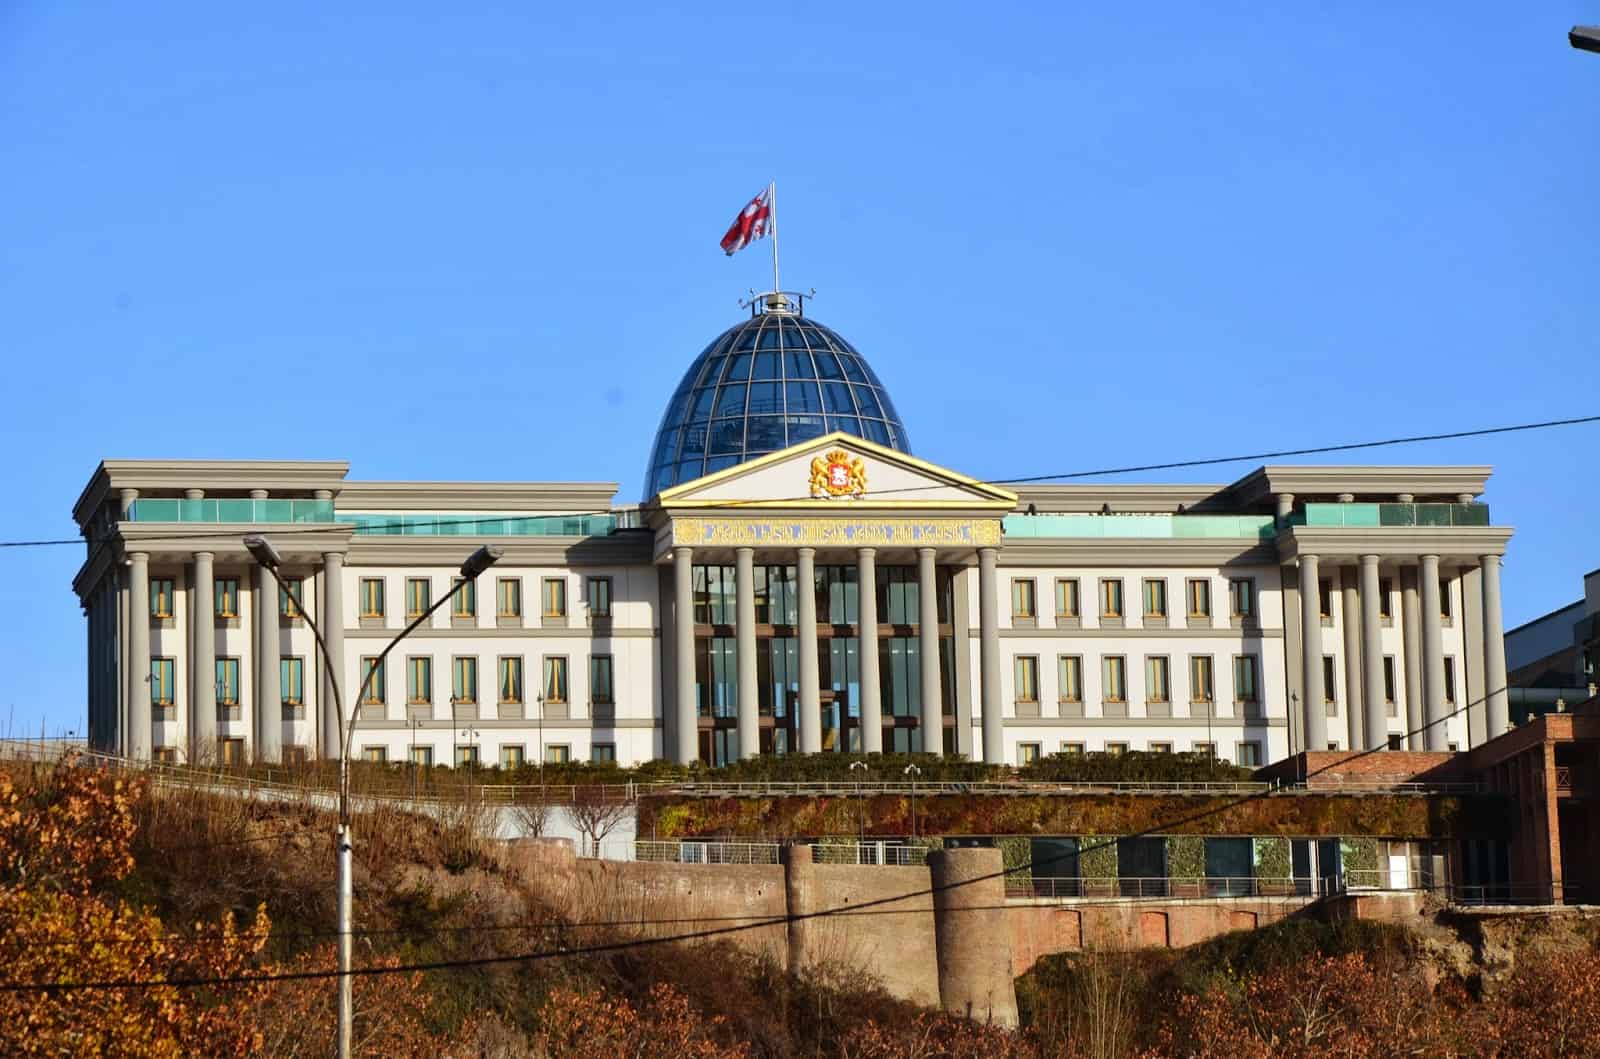 Presidential Palace in Tbilisi, Georgia